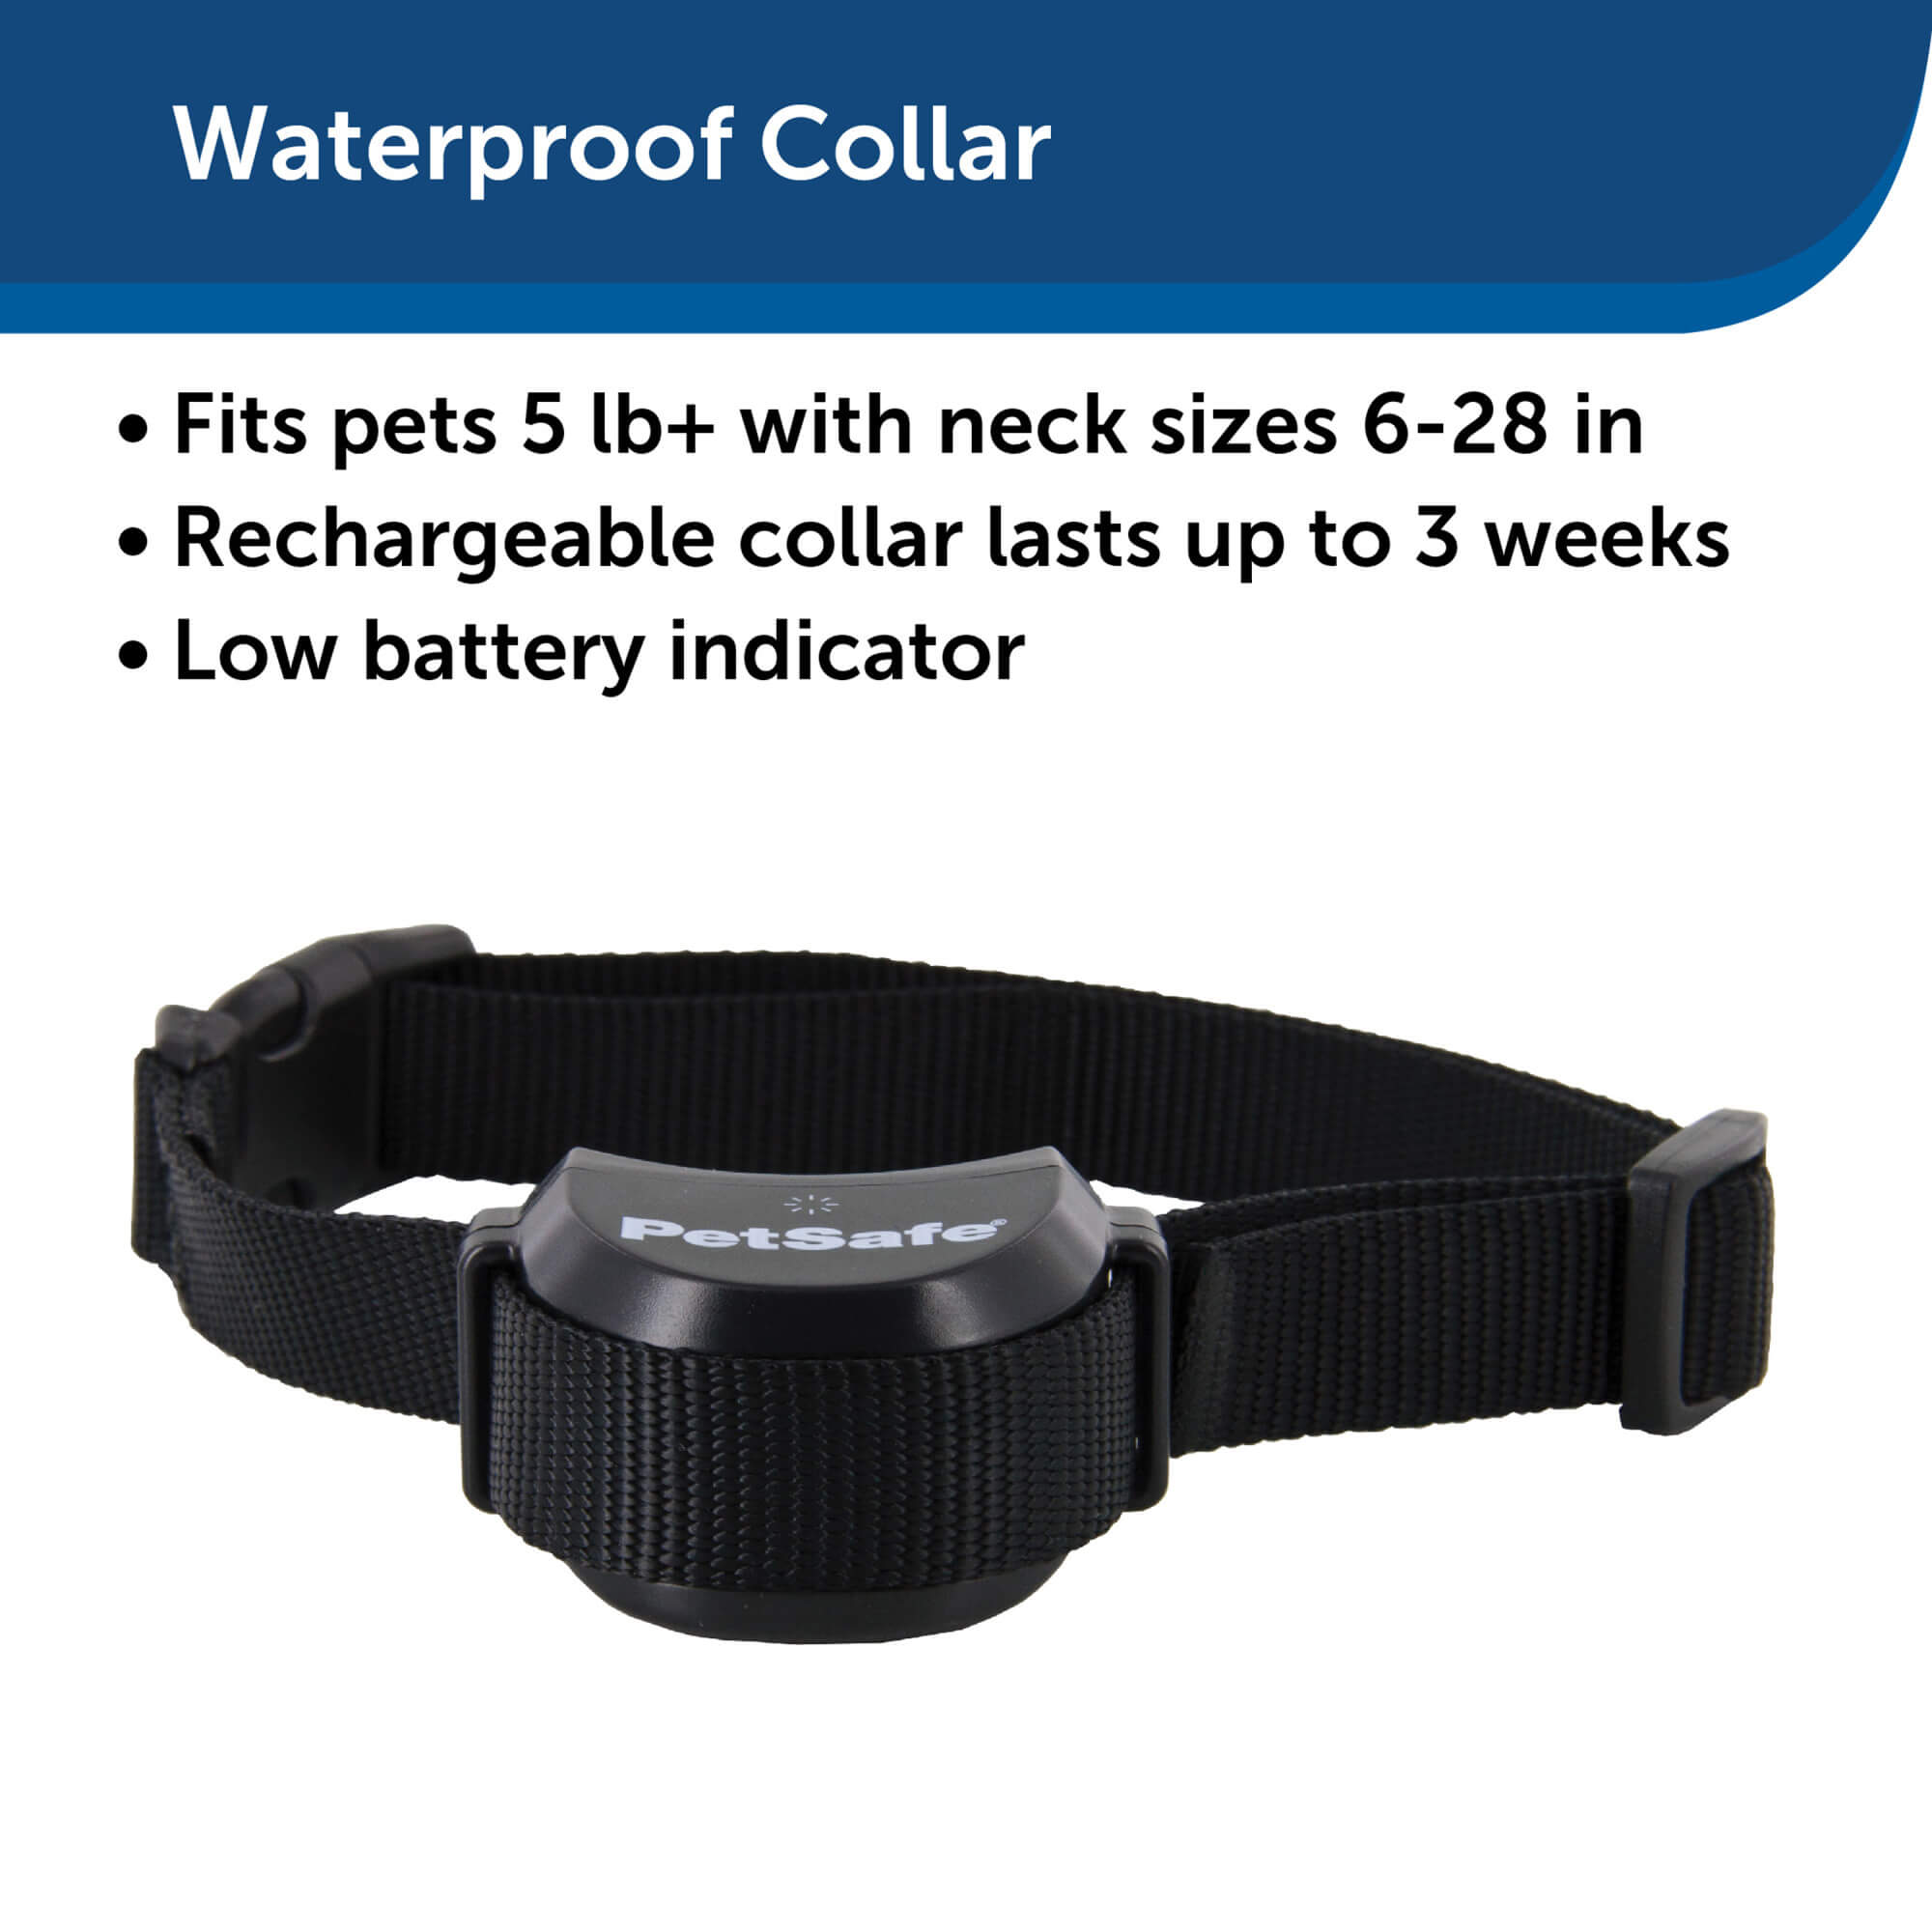 Waterproof collar